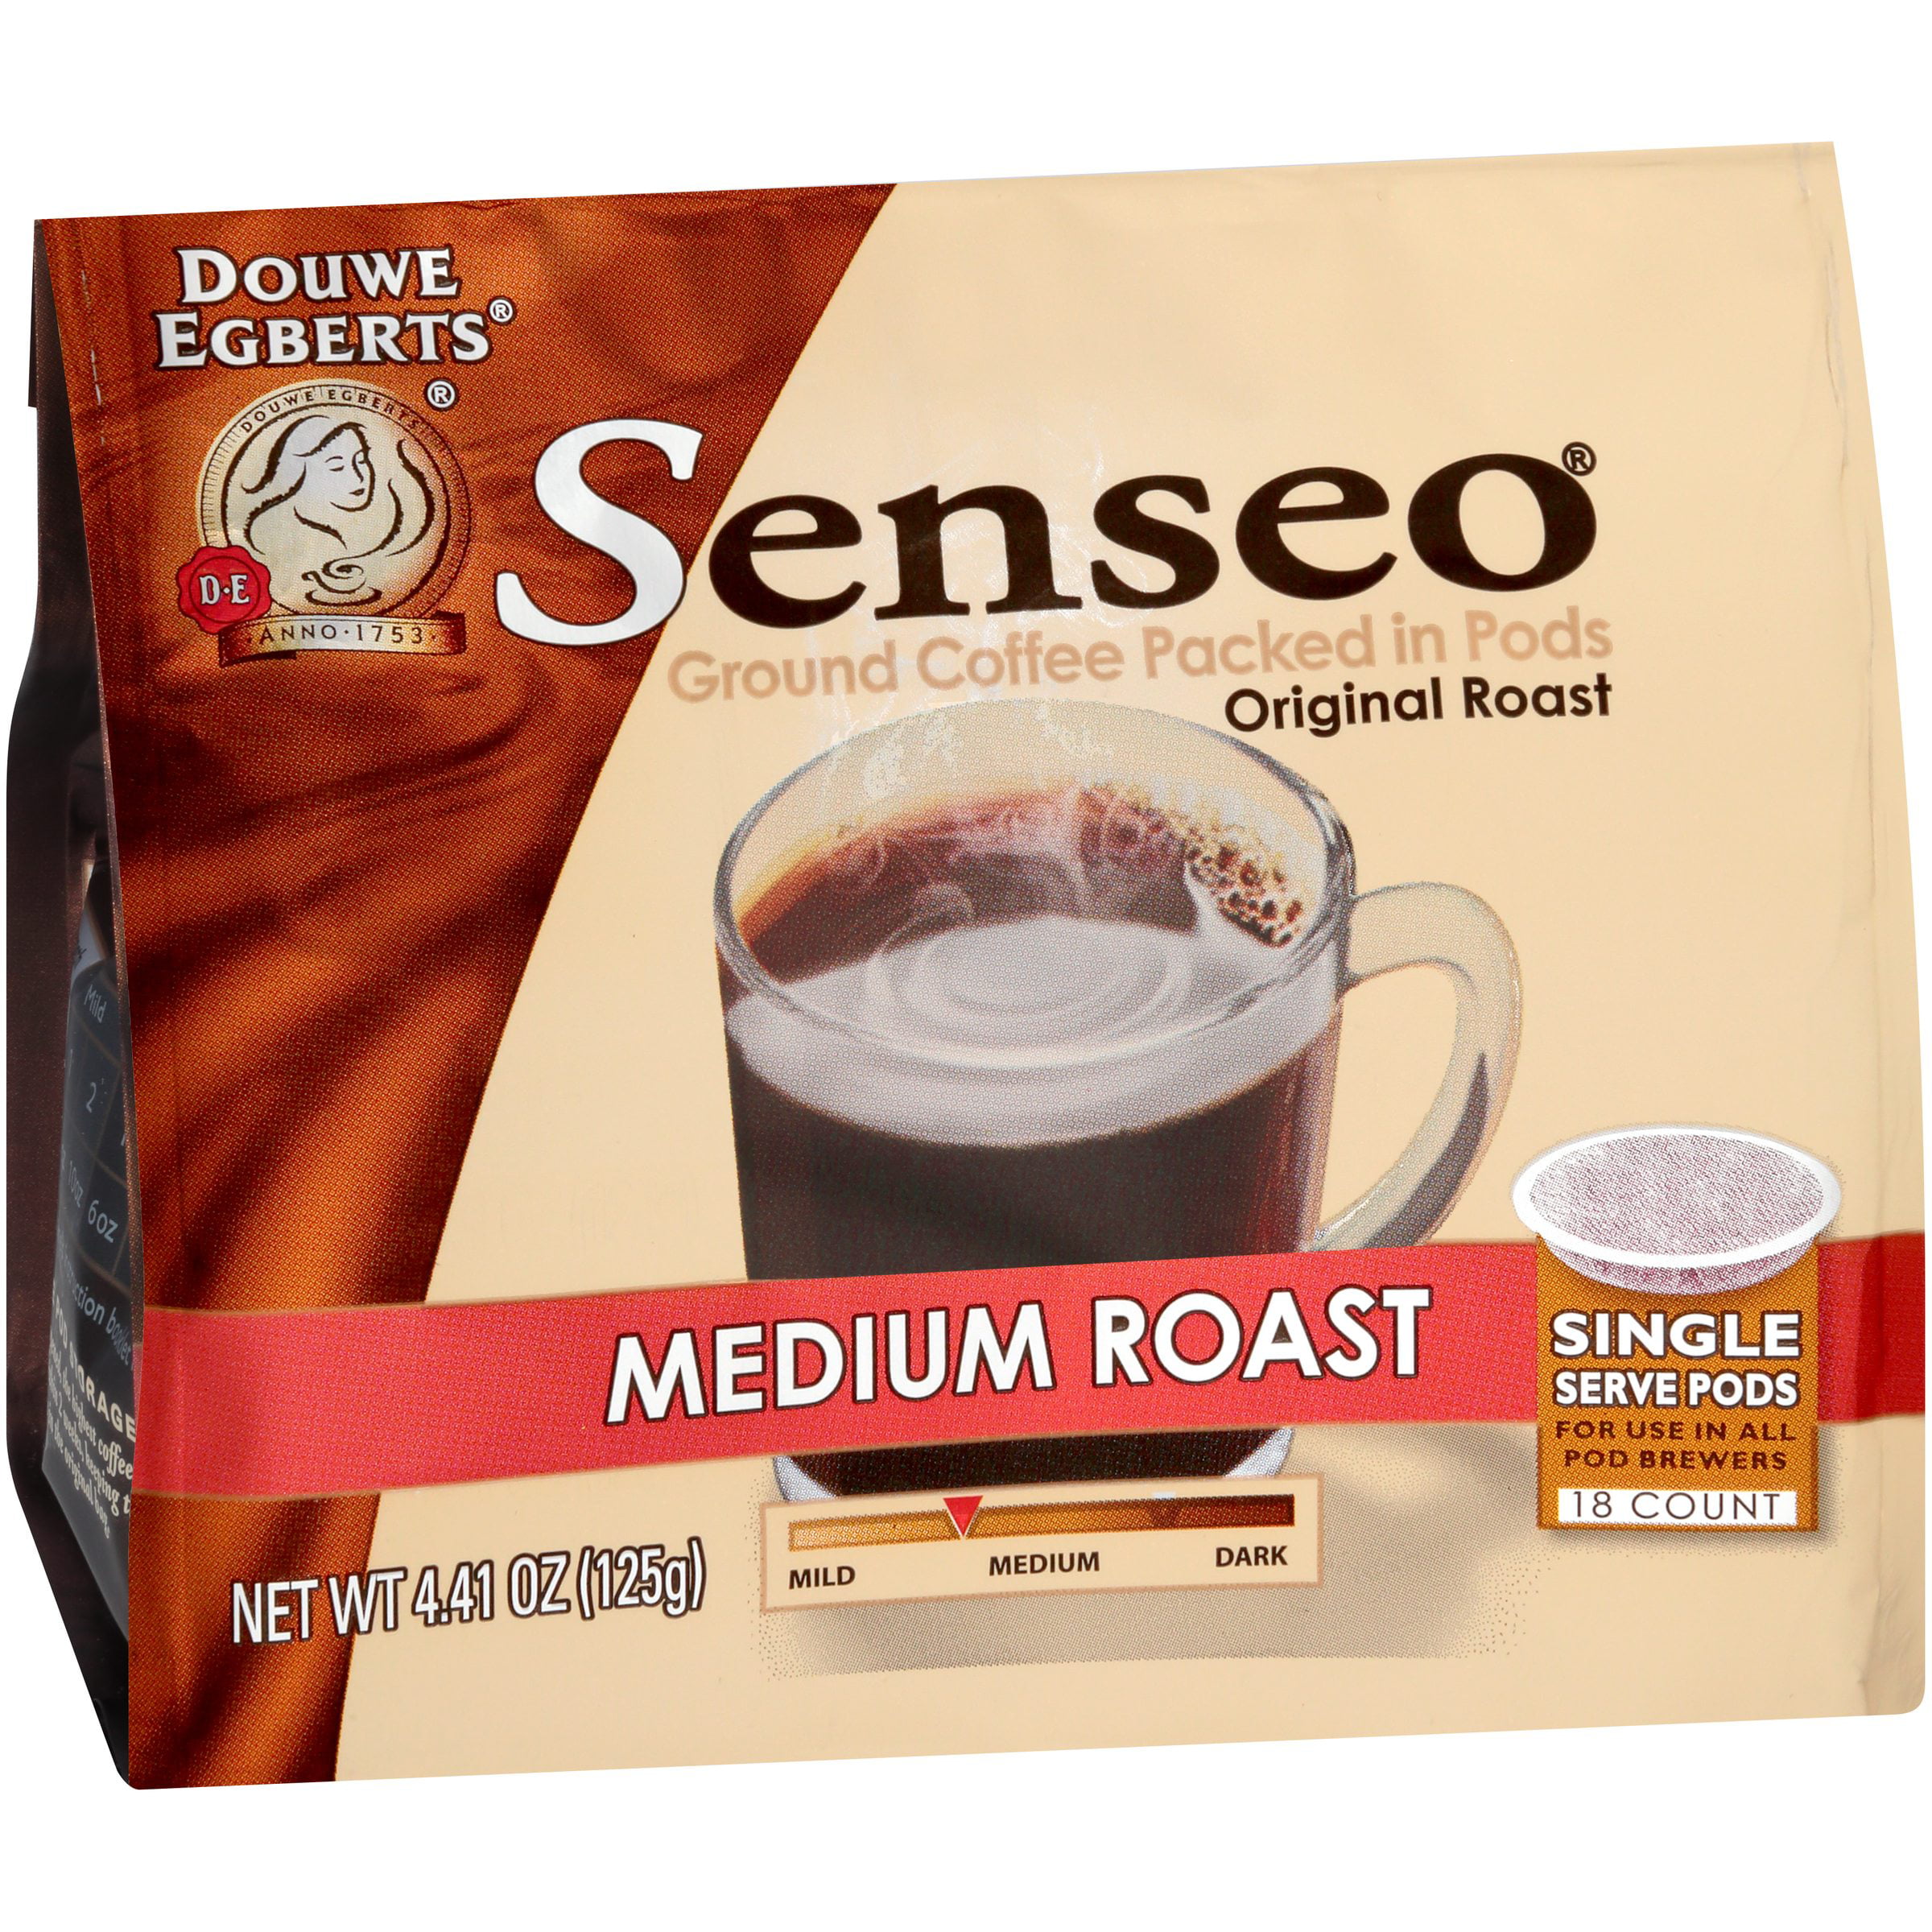 Vaak gesproken micro G Senseo - Medium Roast 18 Ct - Walmart.com